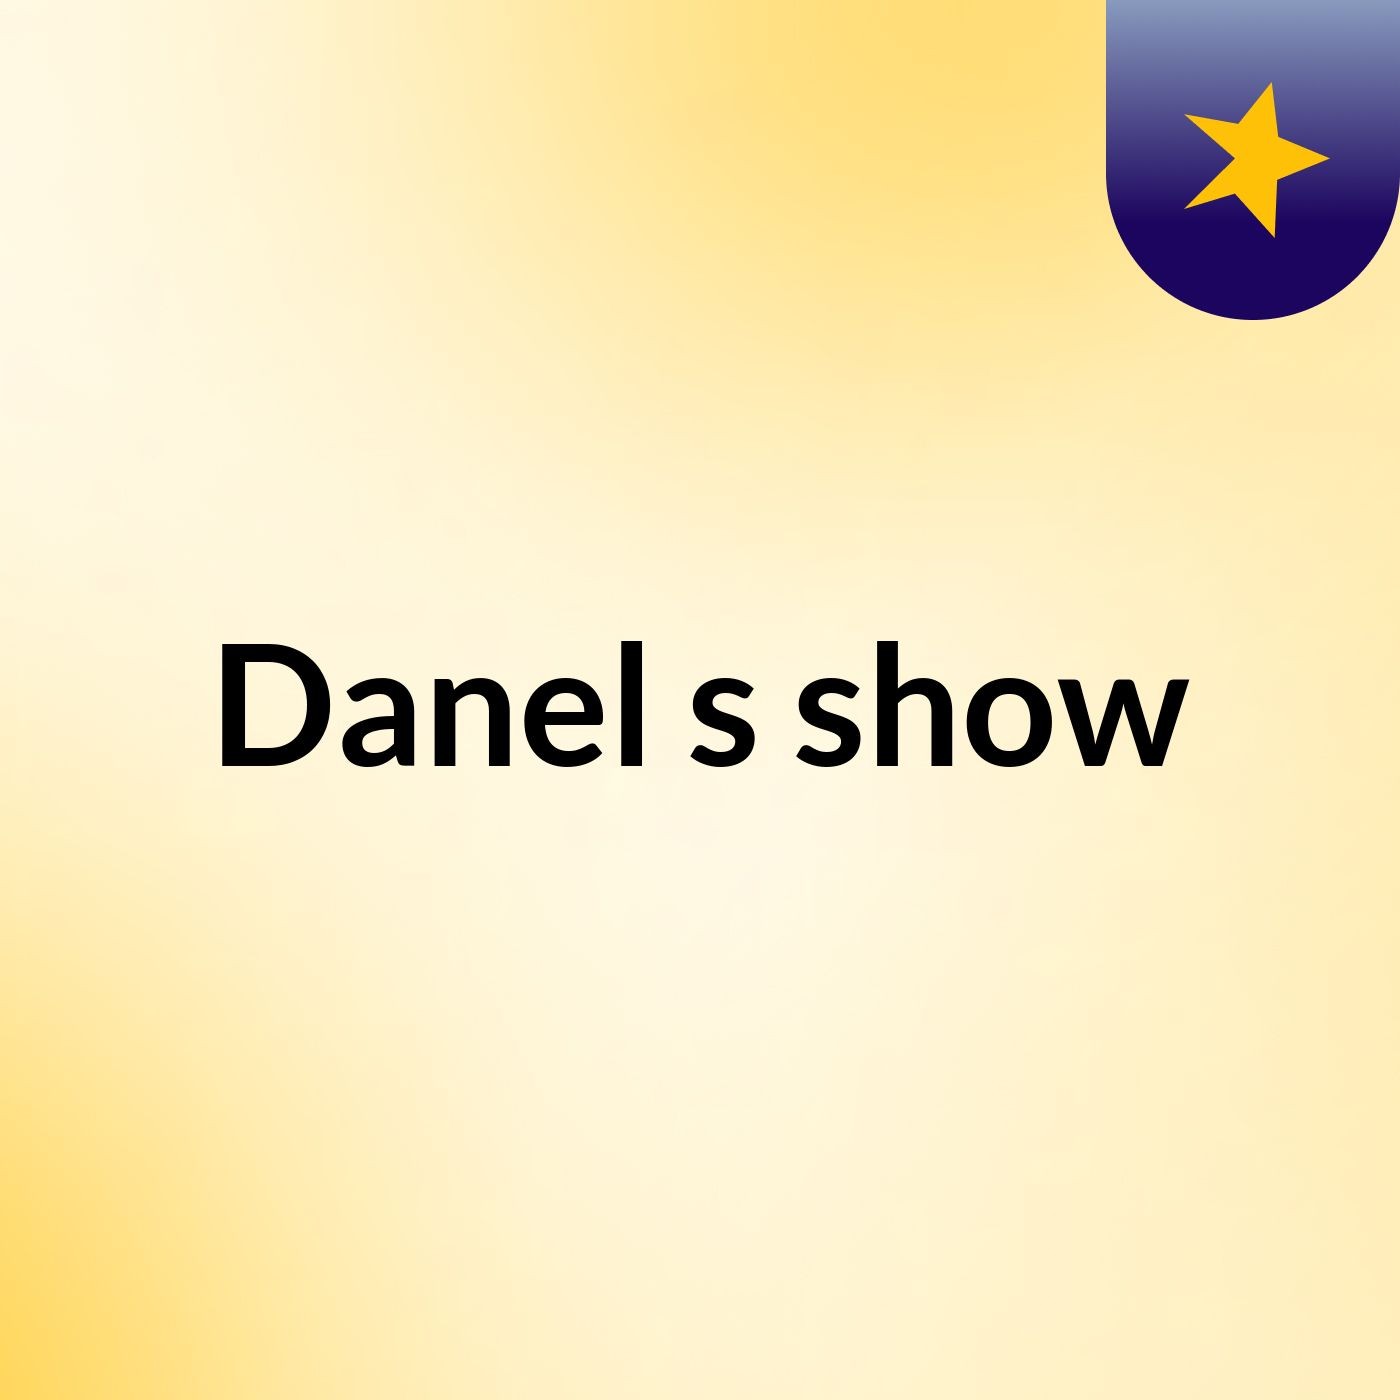 Danel's show